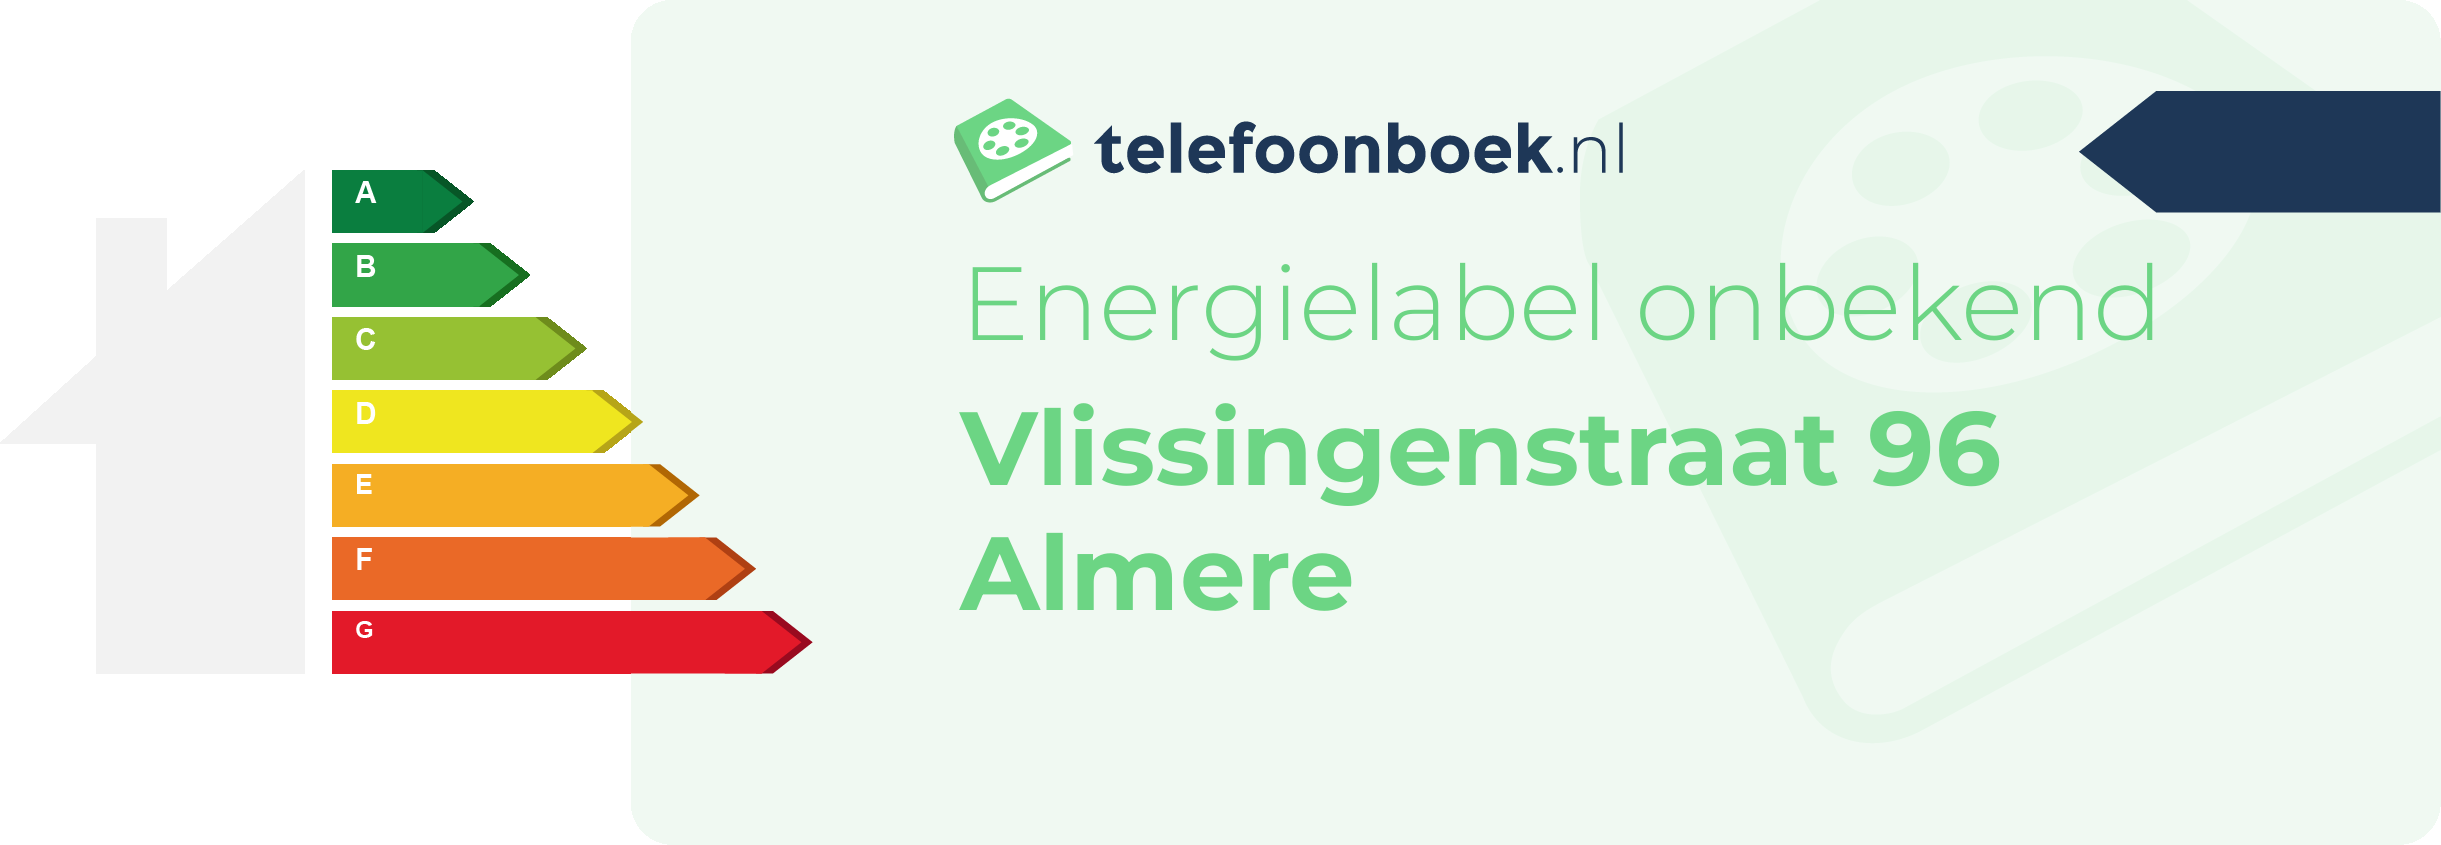 Energielabel Vlissingenstraat 96 Almere